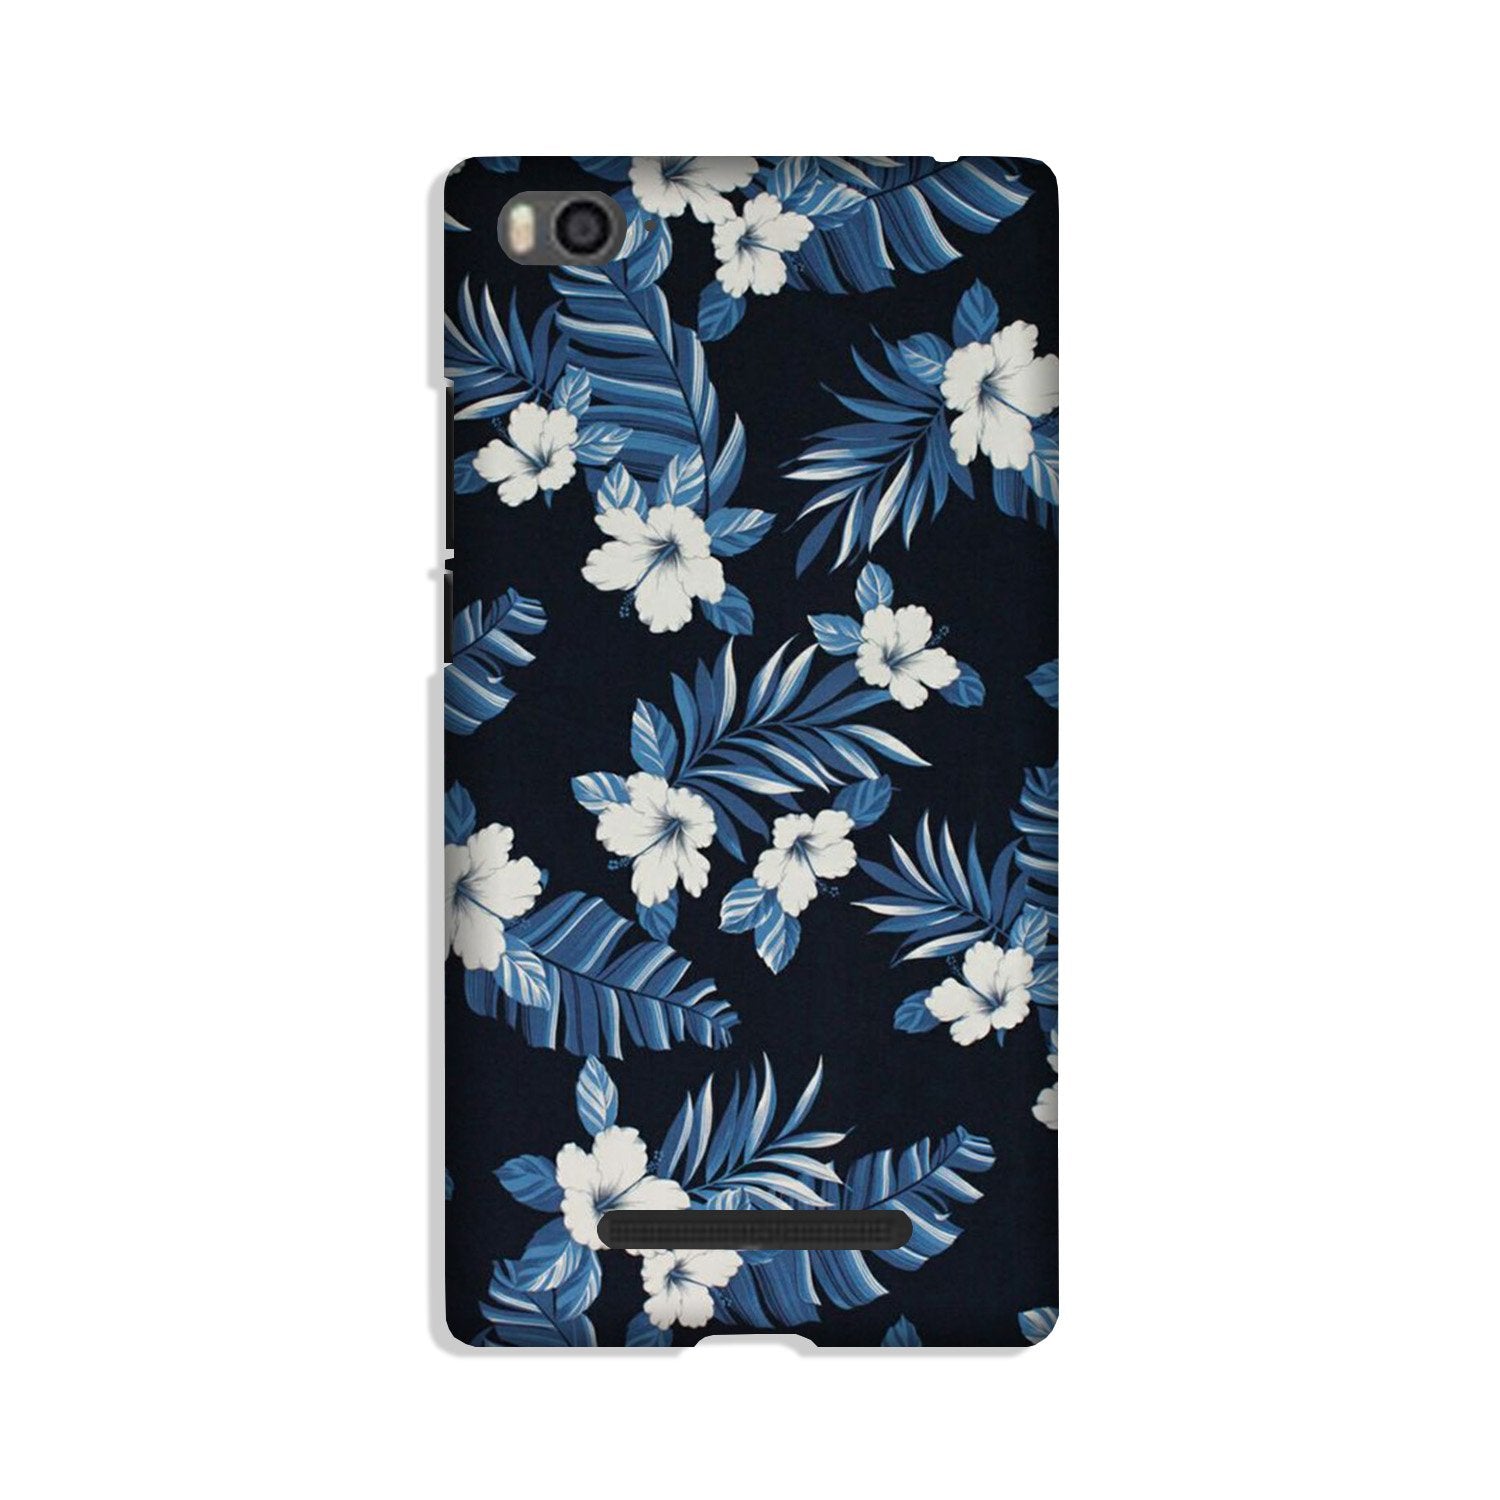 White flowers Blue Background2 Case for Xiaomi Mi 4i